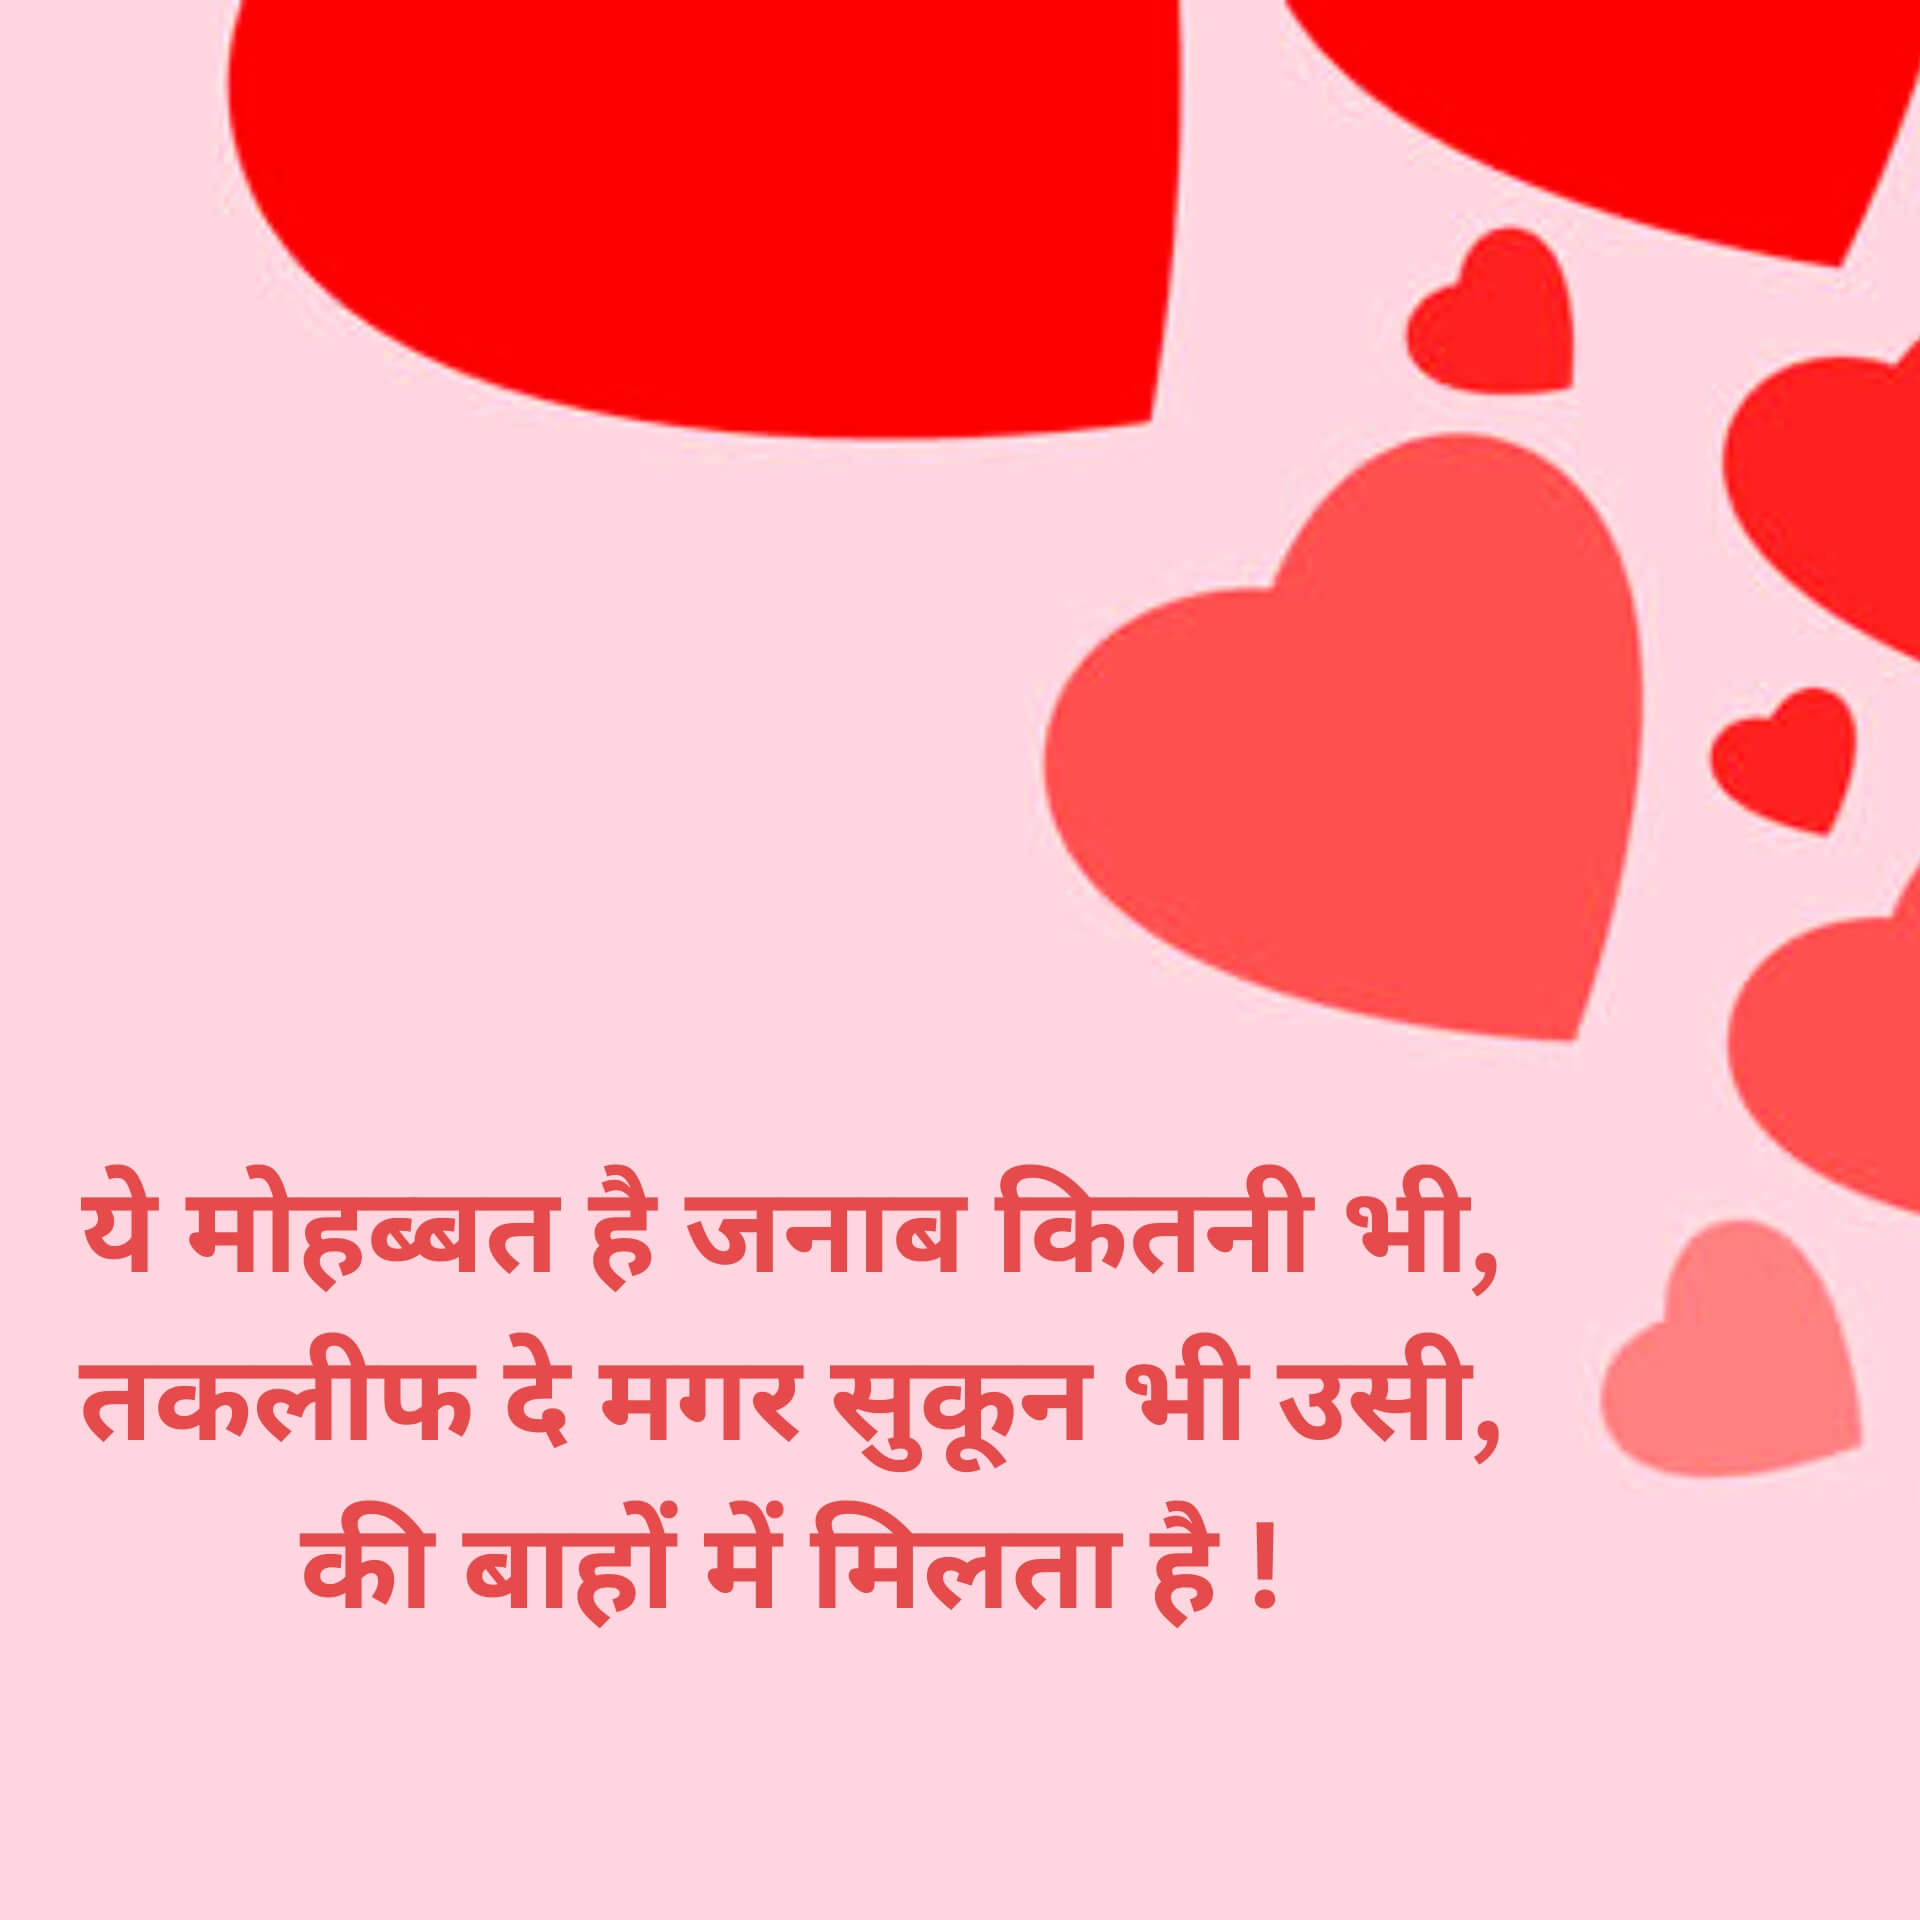 Hindi Love Shayari Wallpaper